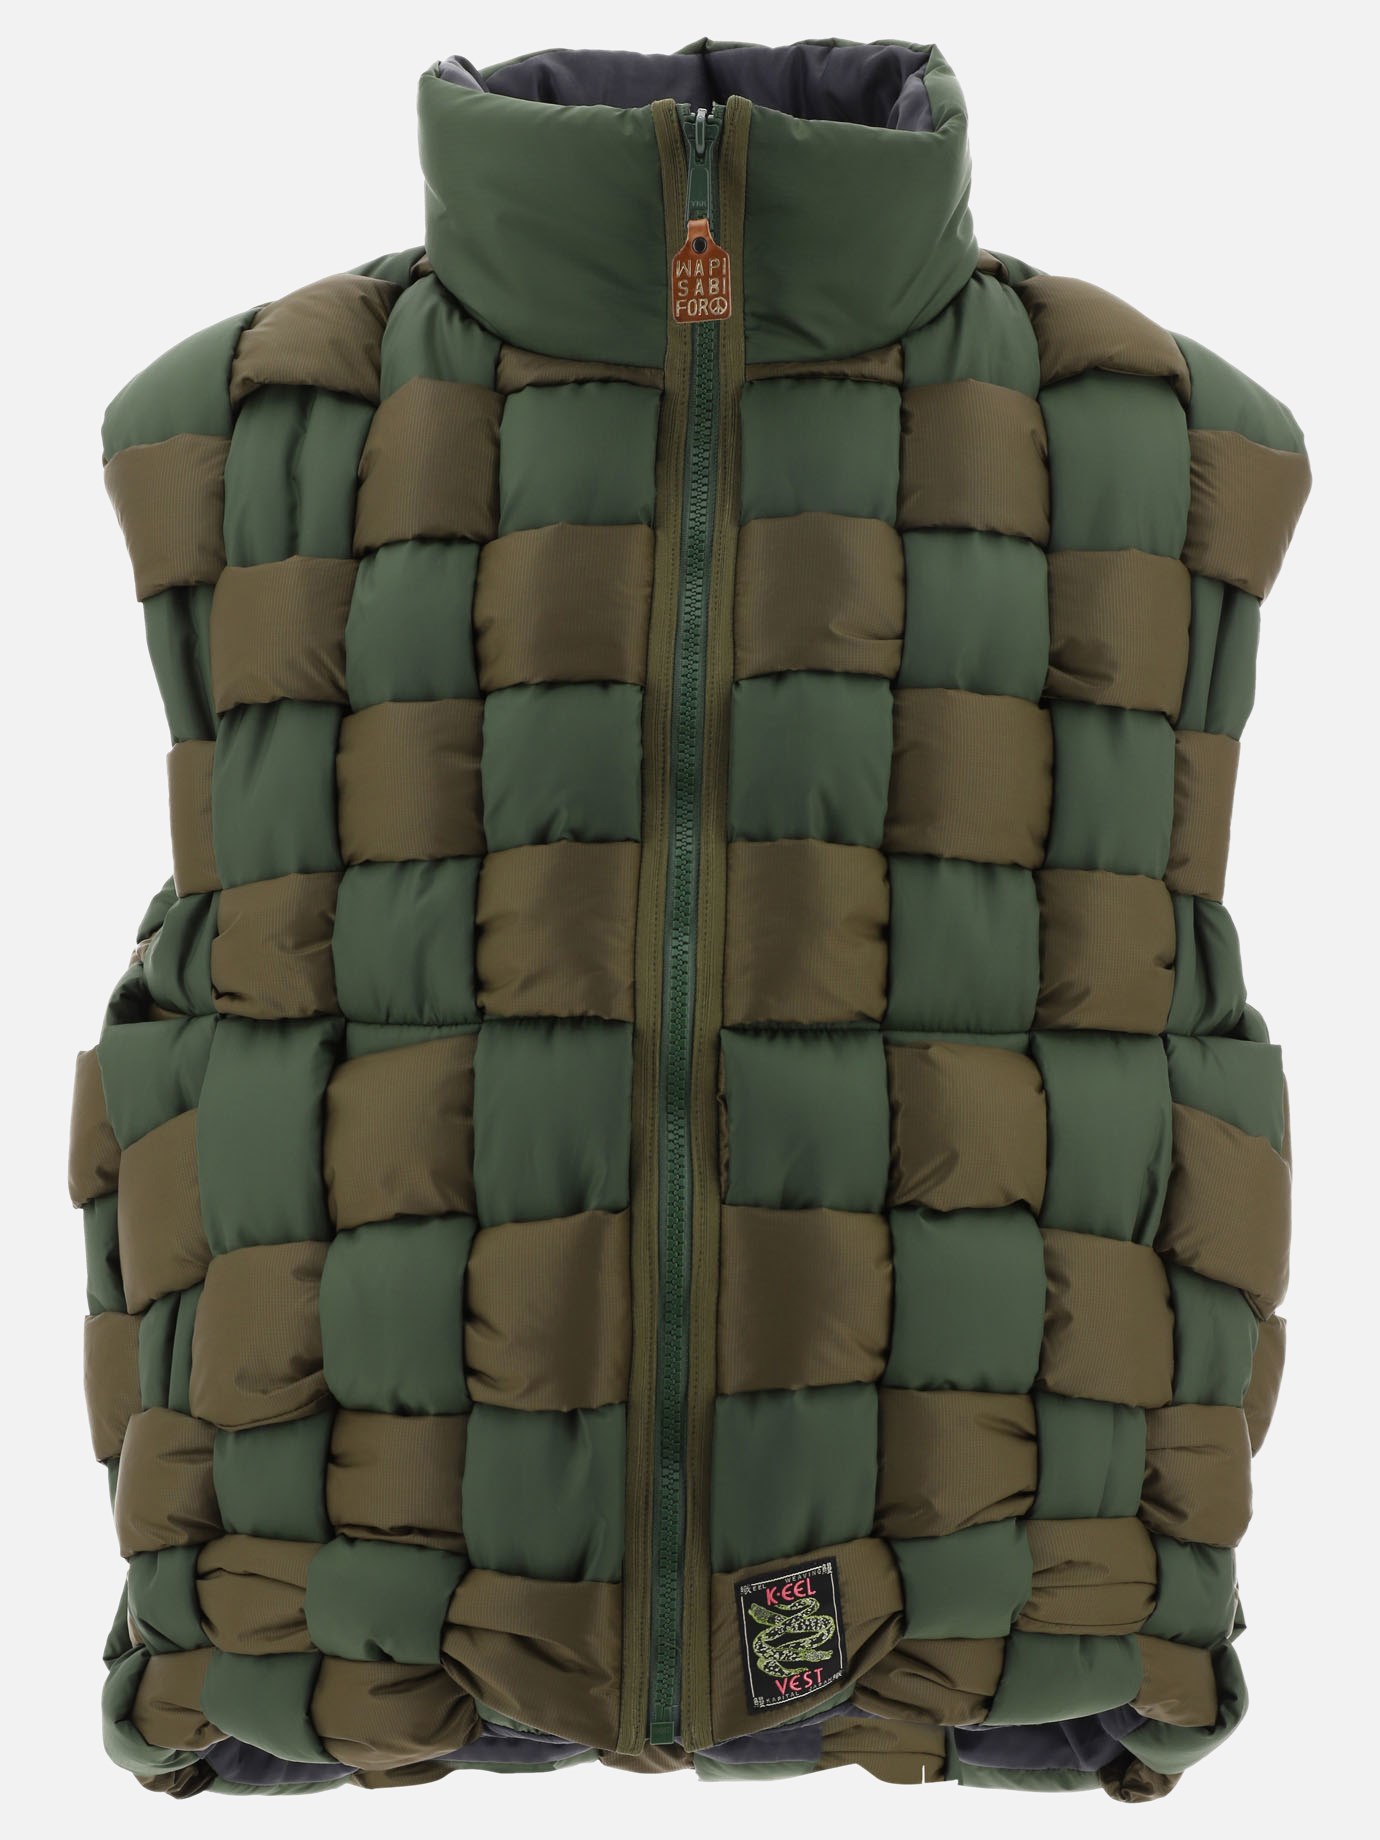  Keel reversible vest jacketby Kapital - 1